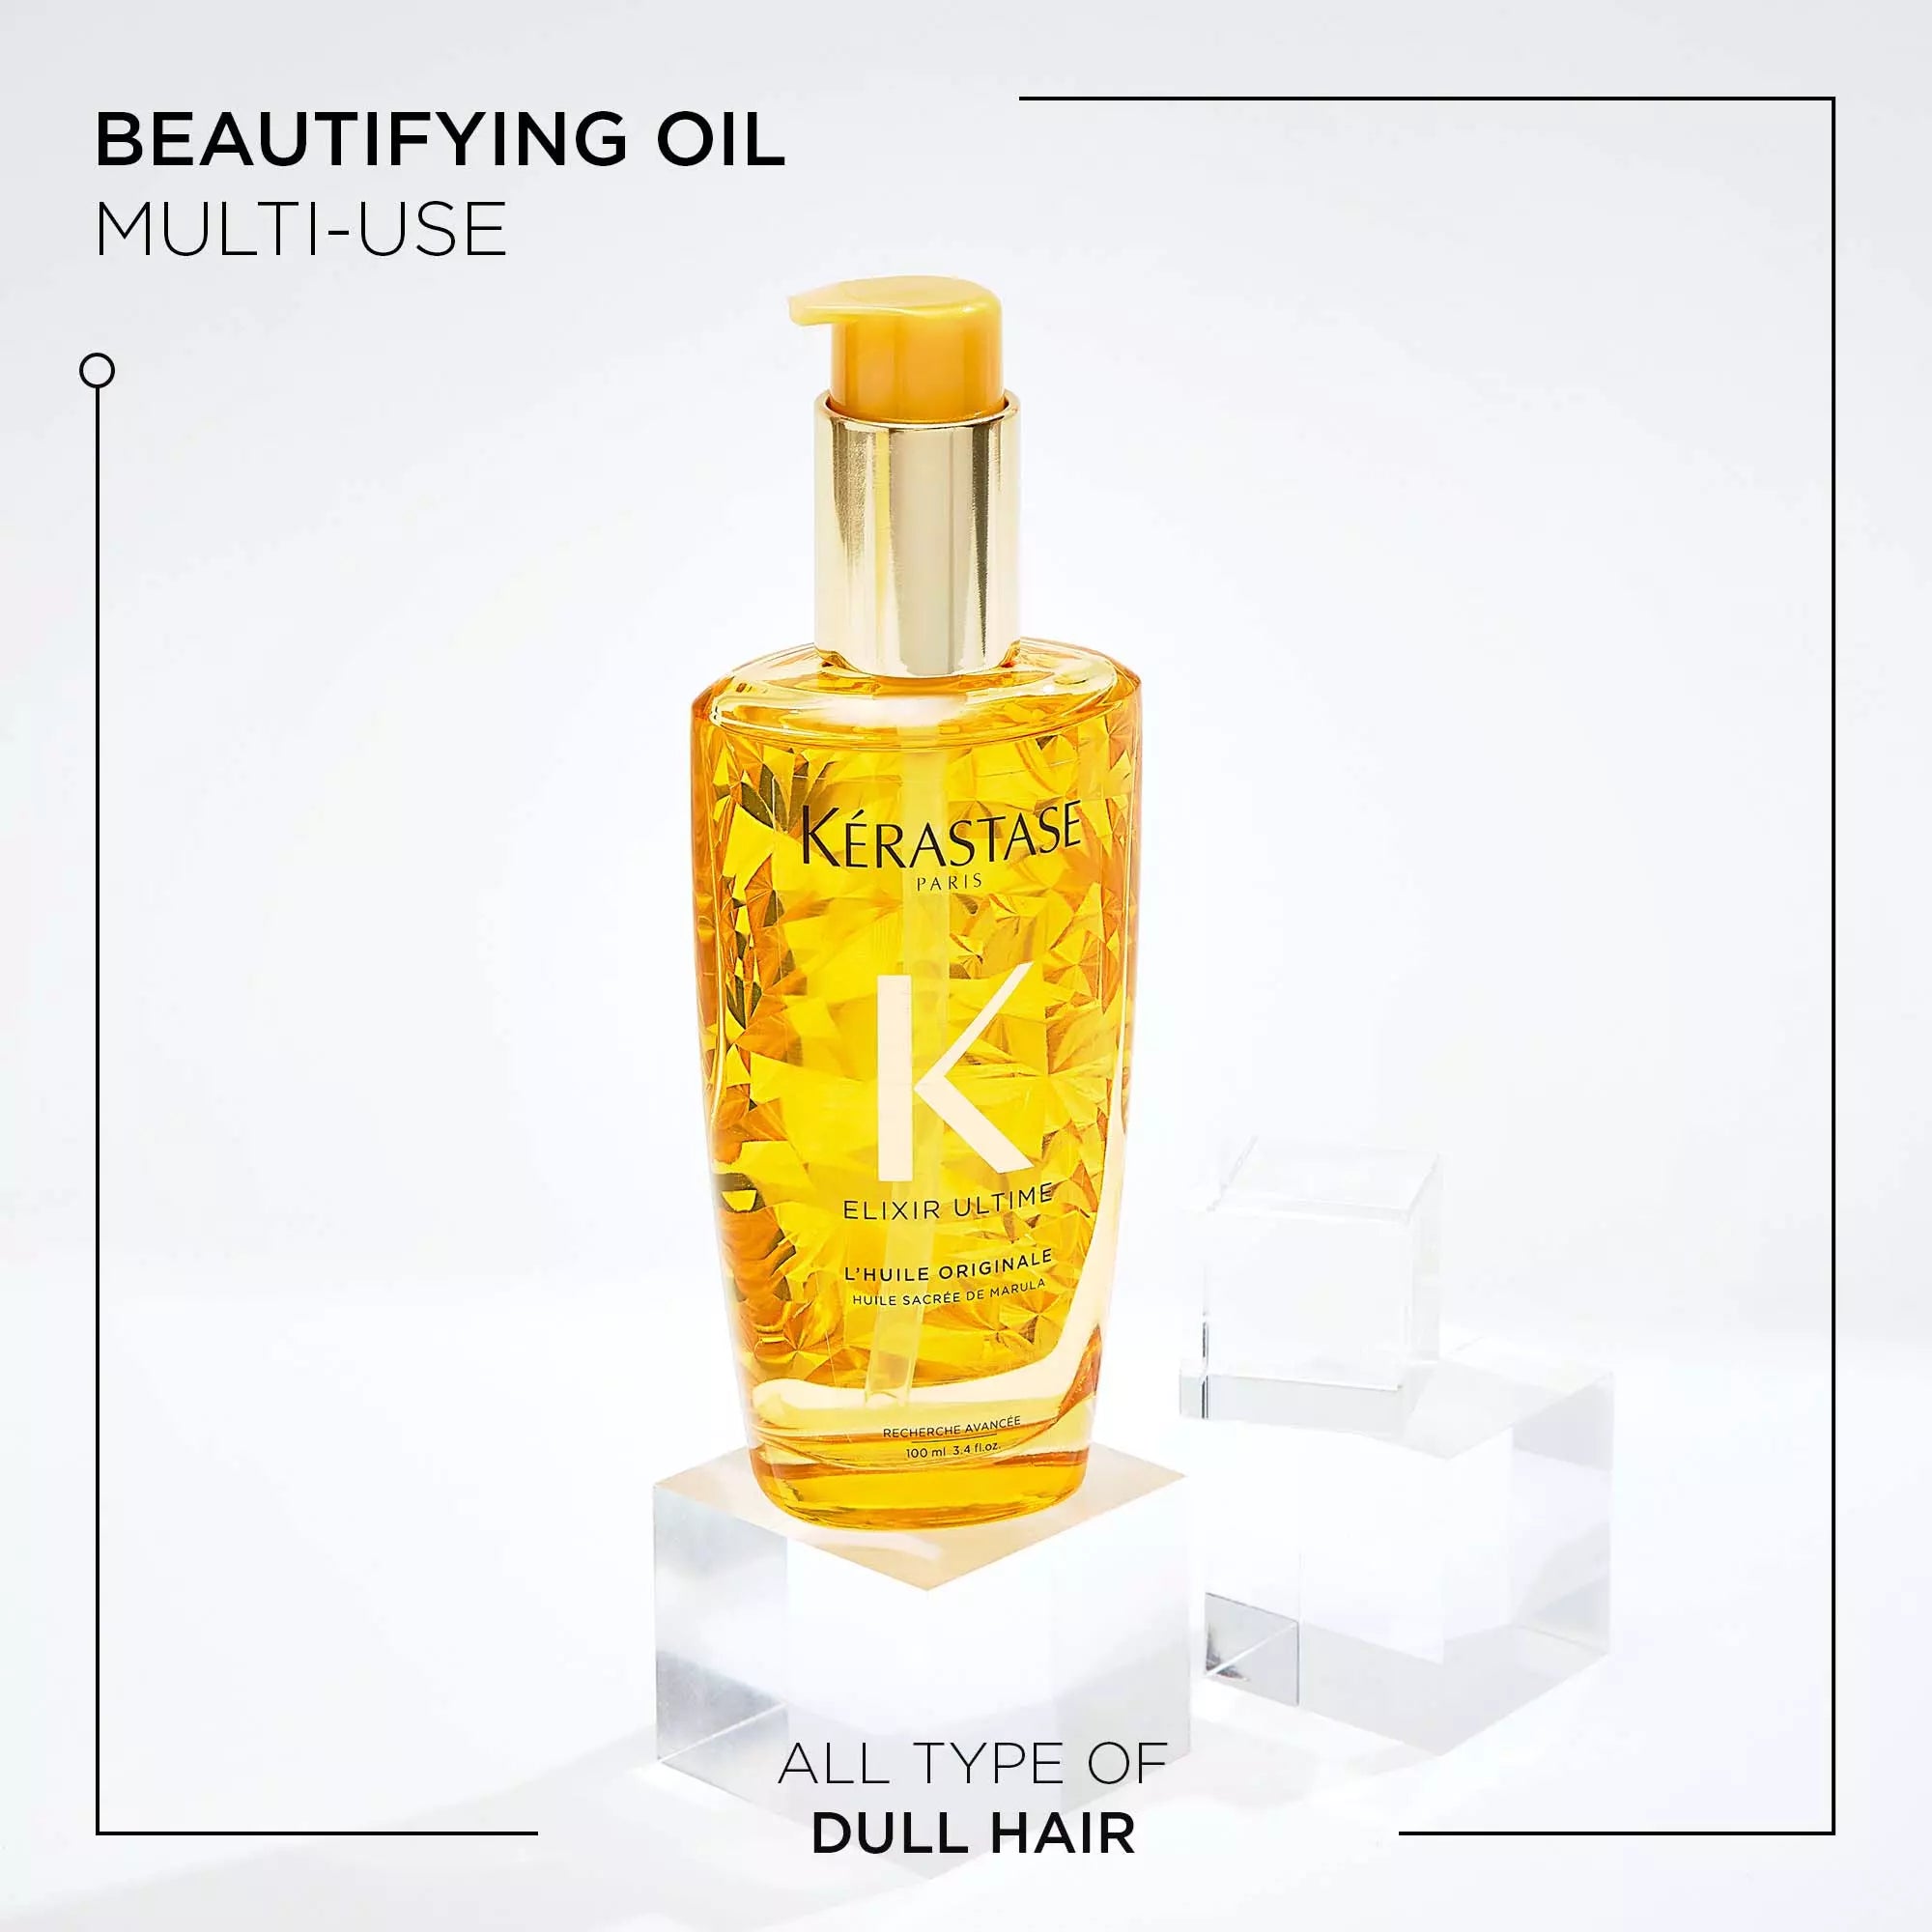 Elixir Ultime L'Huile Originale hair oil 100ML